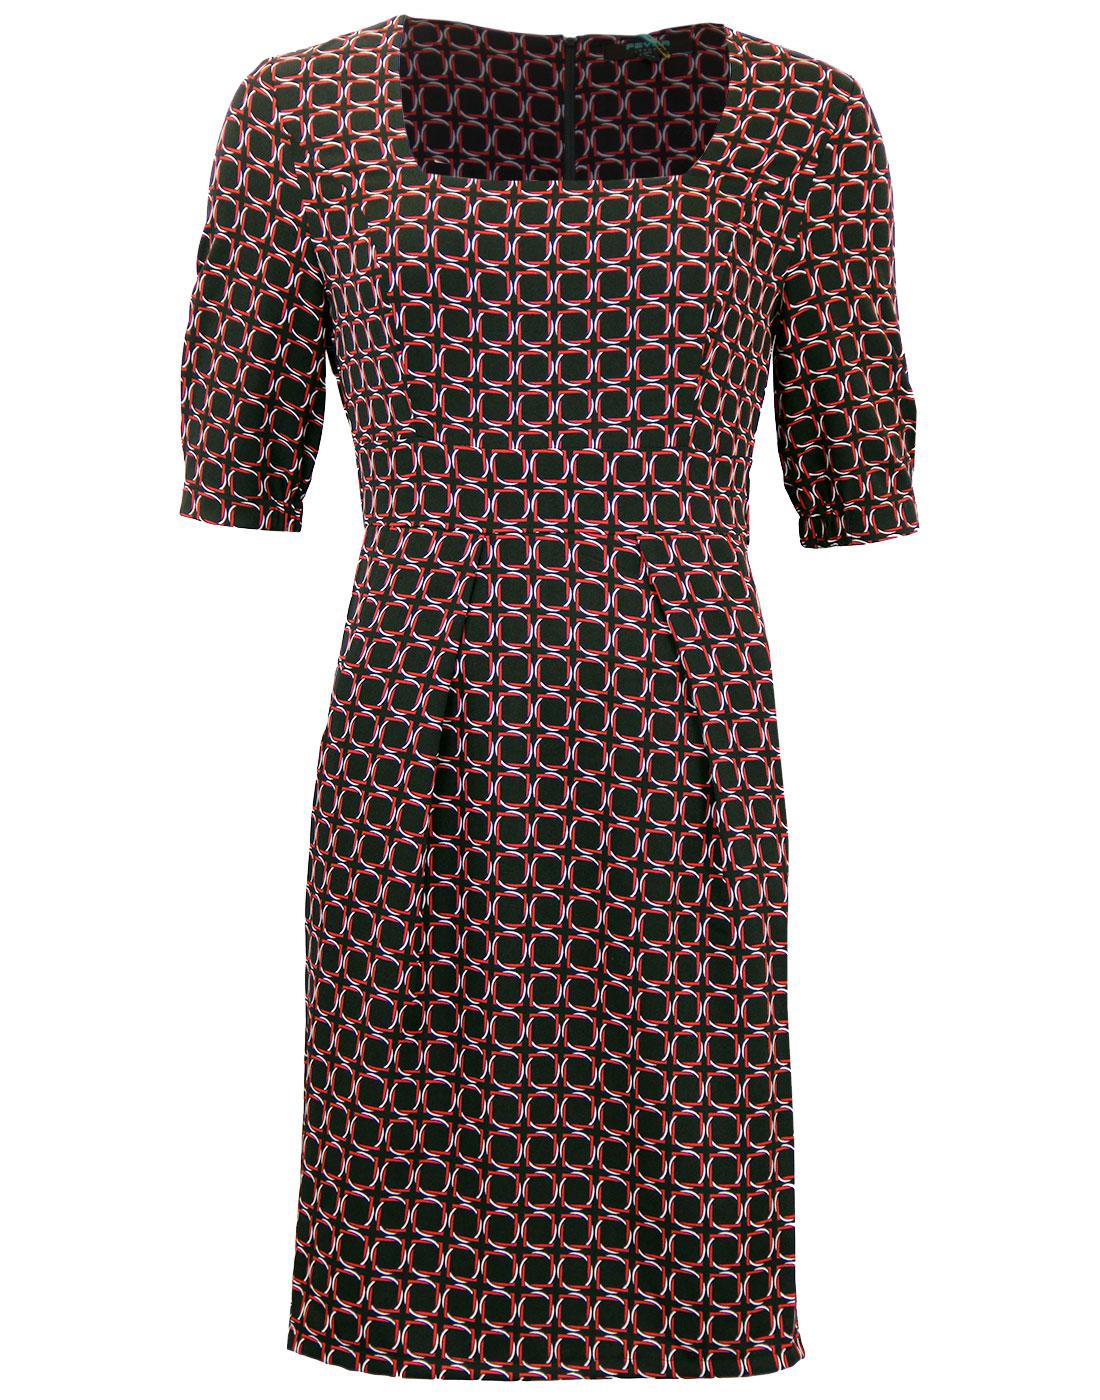 FEVER Merseille Retro 1960s Geoemtric Print Square Neckline Dress